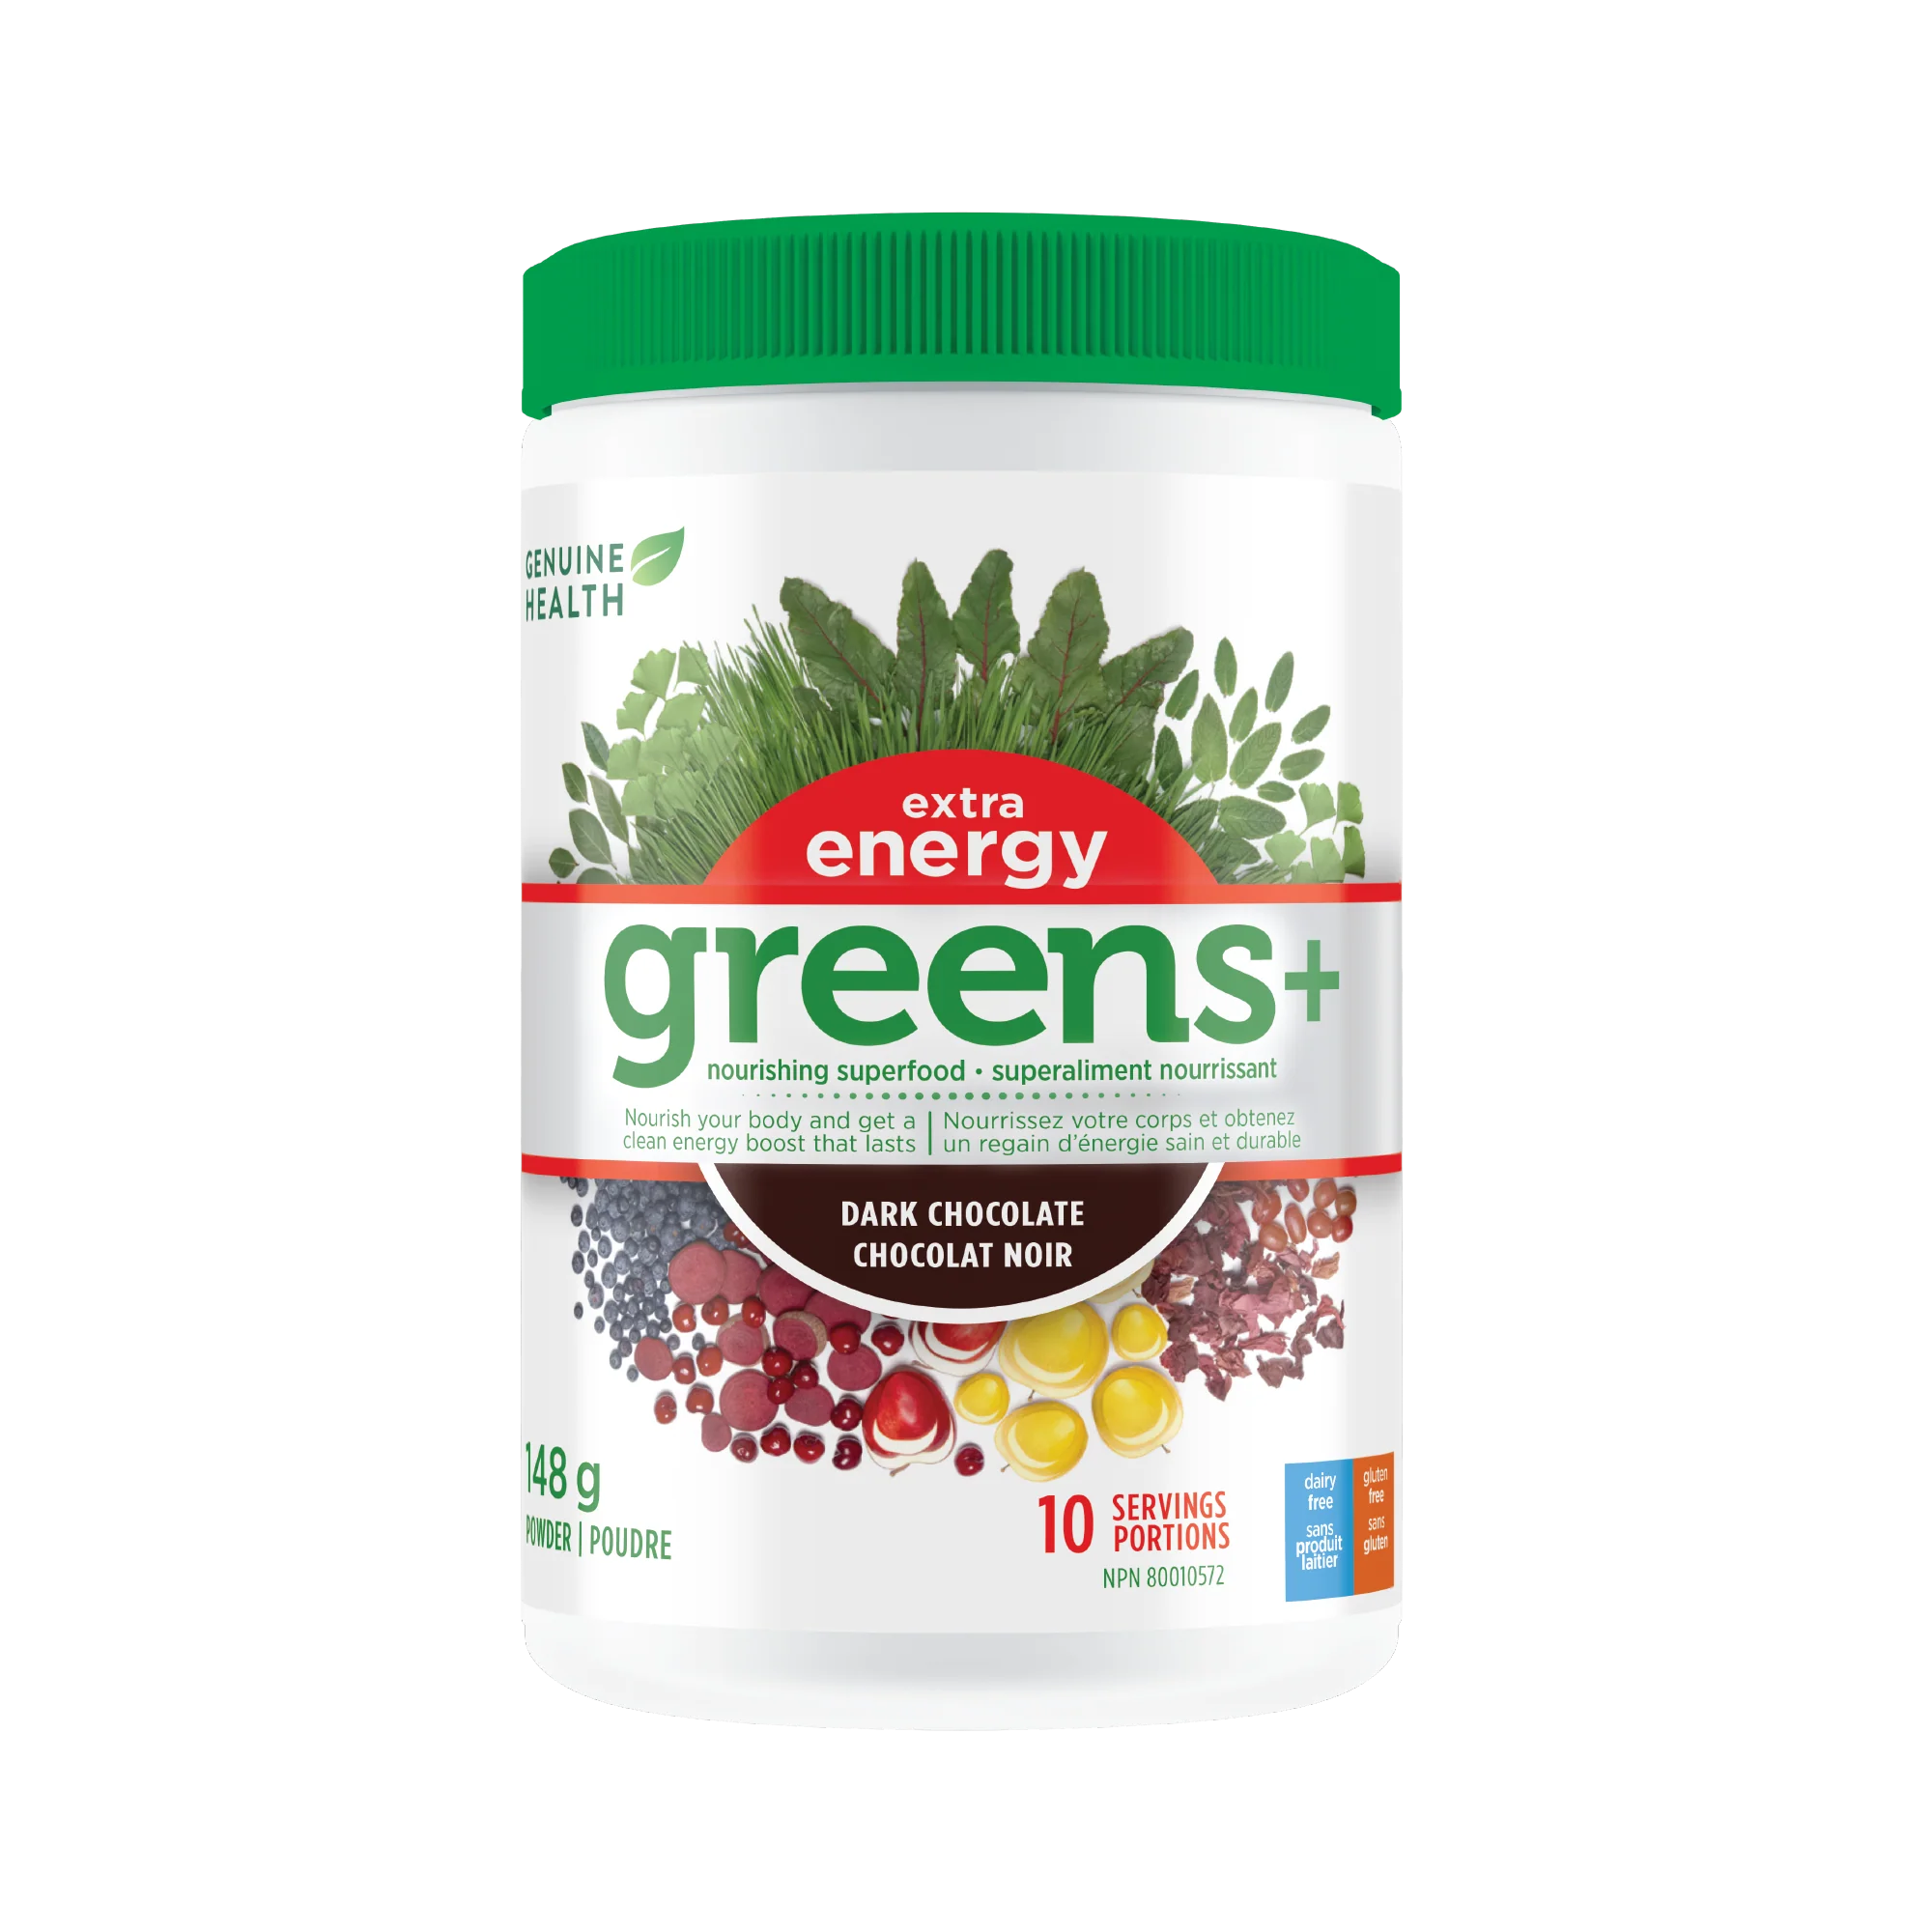 Genuine Health greens+ extra energy | dark chocolate